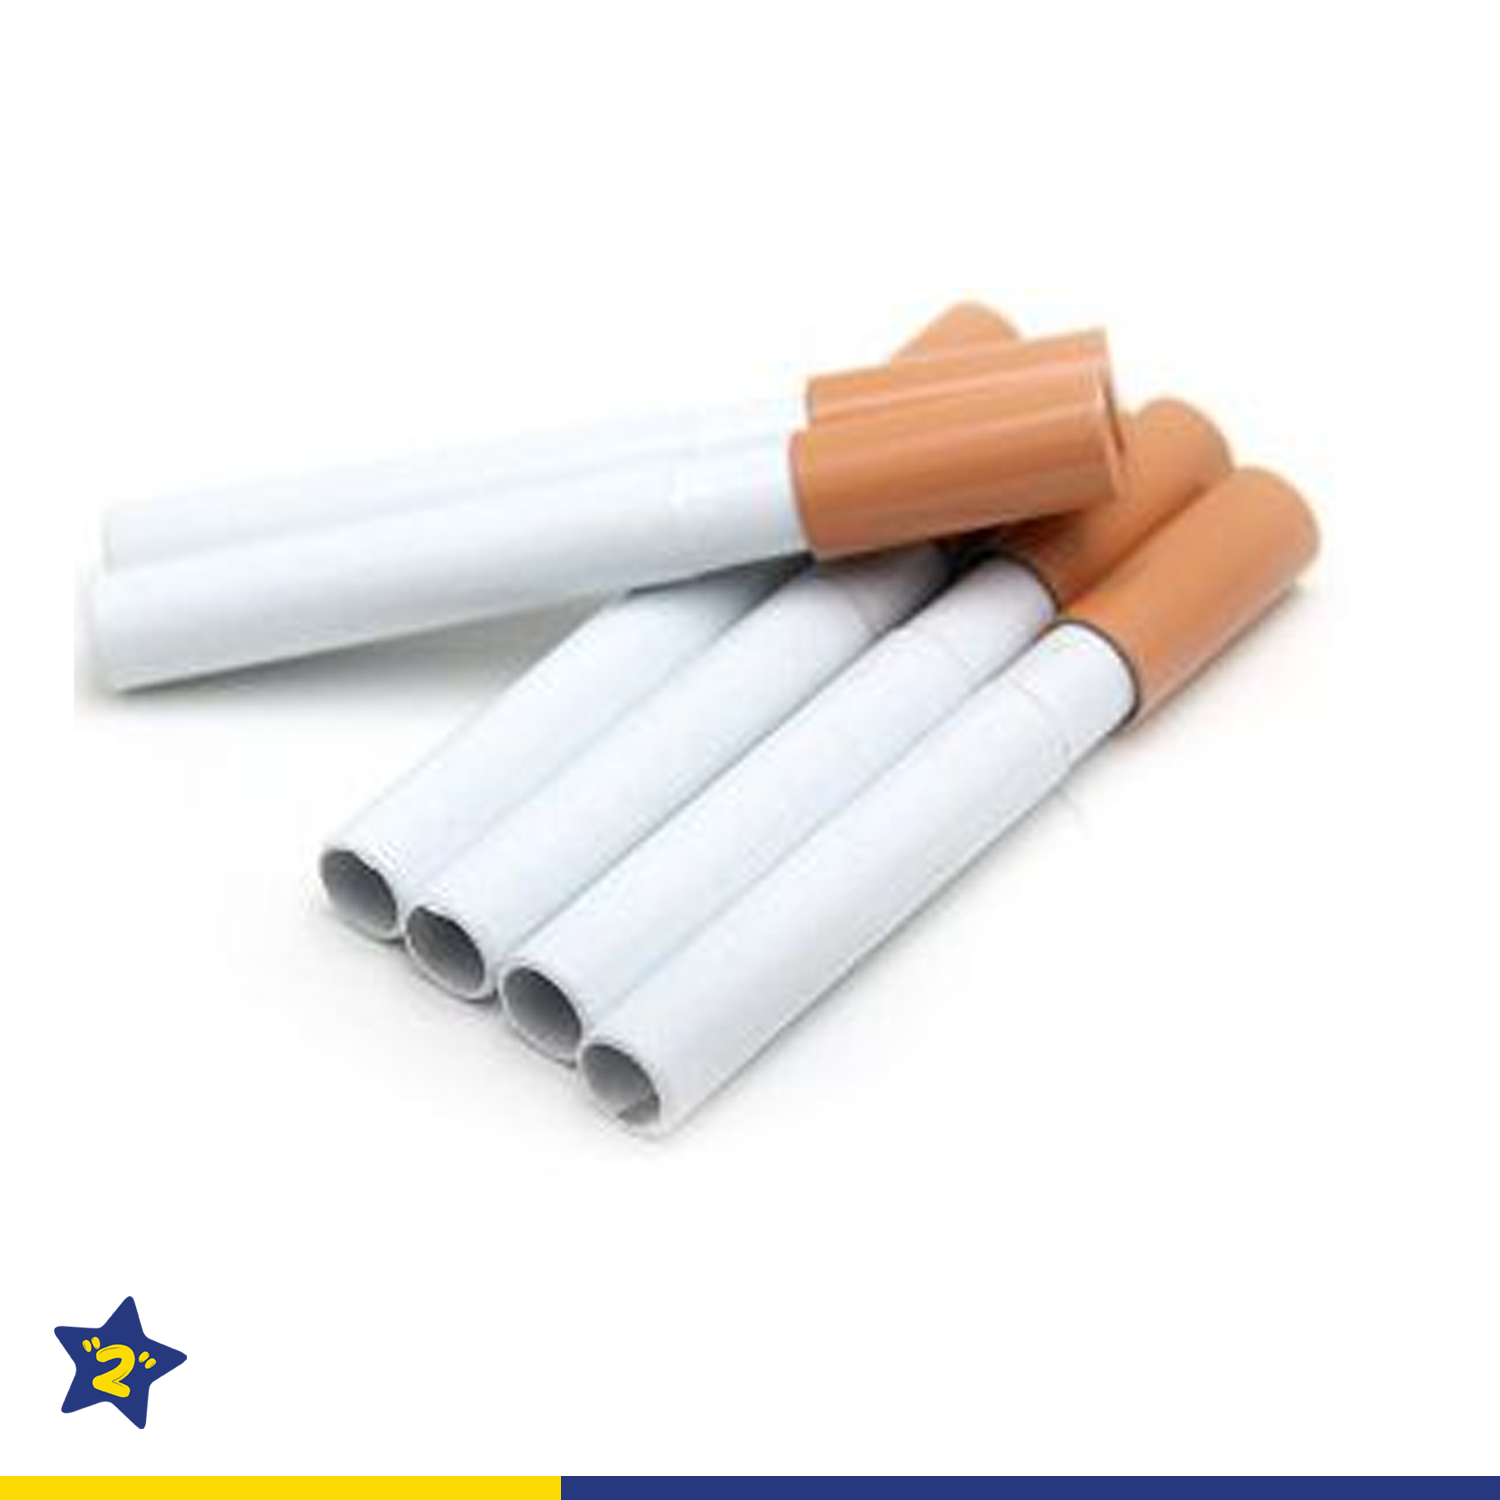  Self Cleaning Metal Cigarette Pipe (6 Pack)